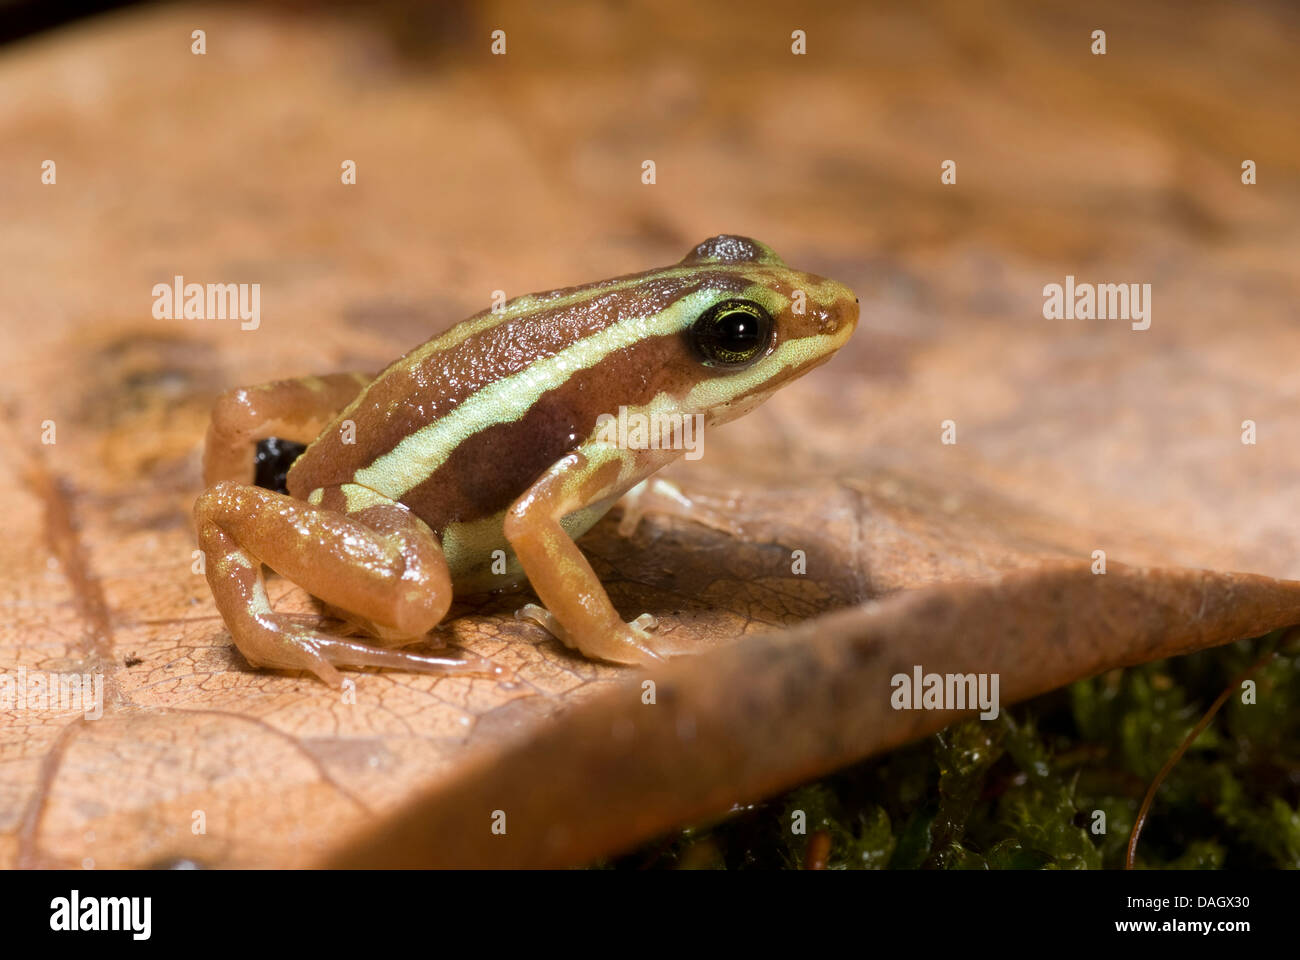 Anthonys Phantasmal Poison Frog, rana de flecha venenosa (Epipedobates anthonyi), sentado sobre una hoja muerta Foto de stock